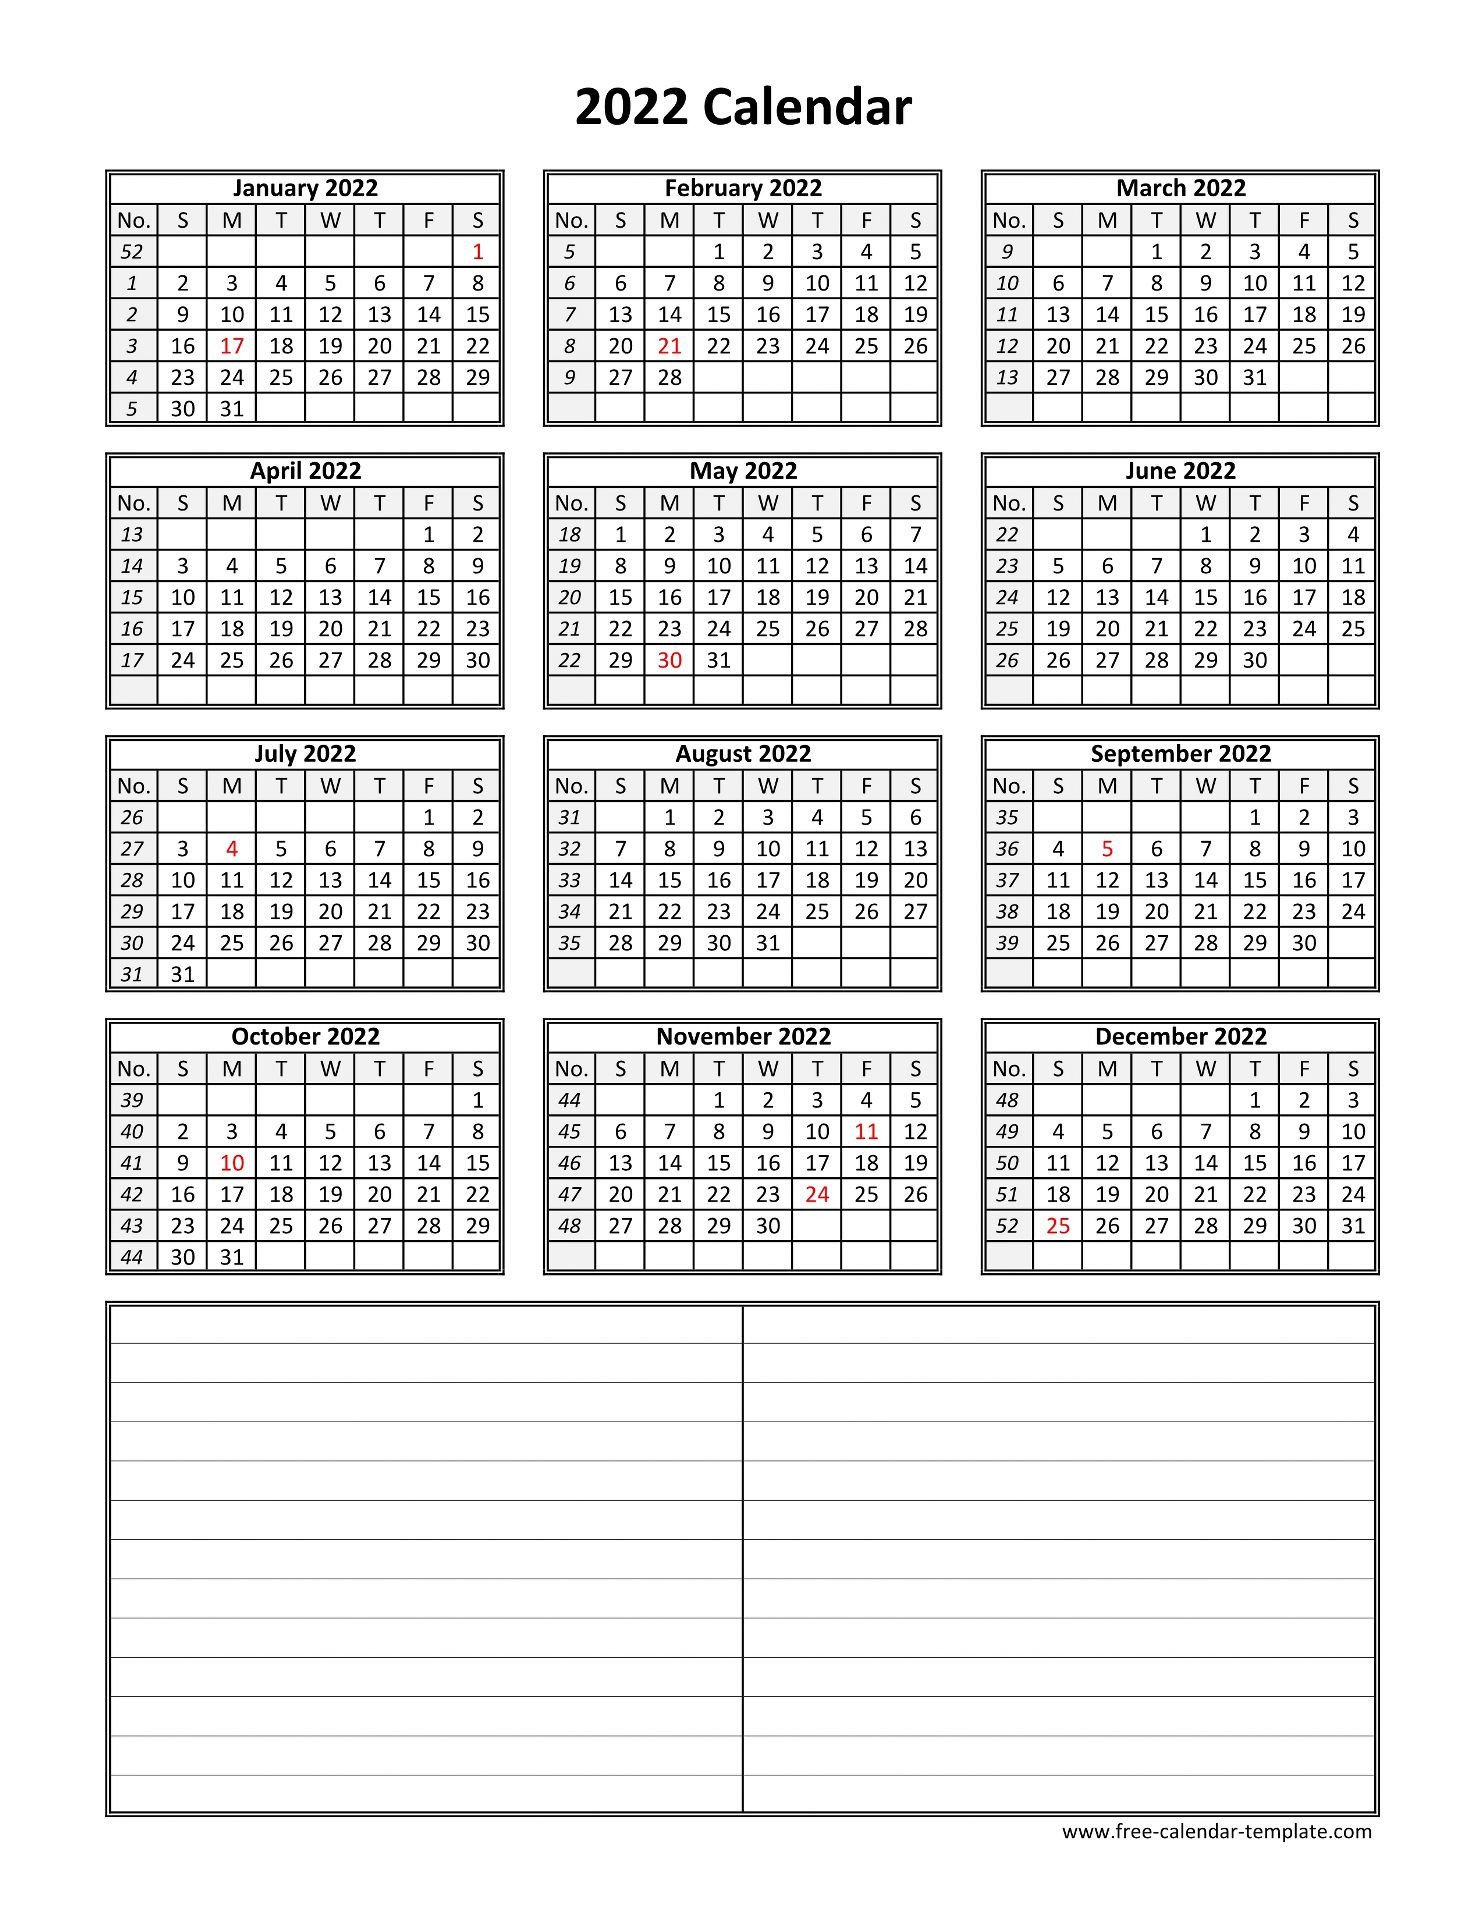 2022 Calendar Printable One Page - Free 2021 And 2022 Calendar-2022 Printable Calendar One Page